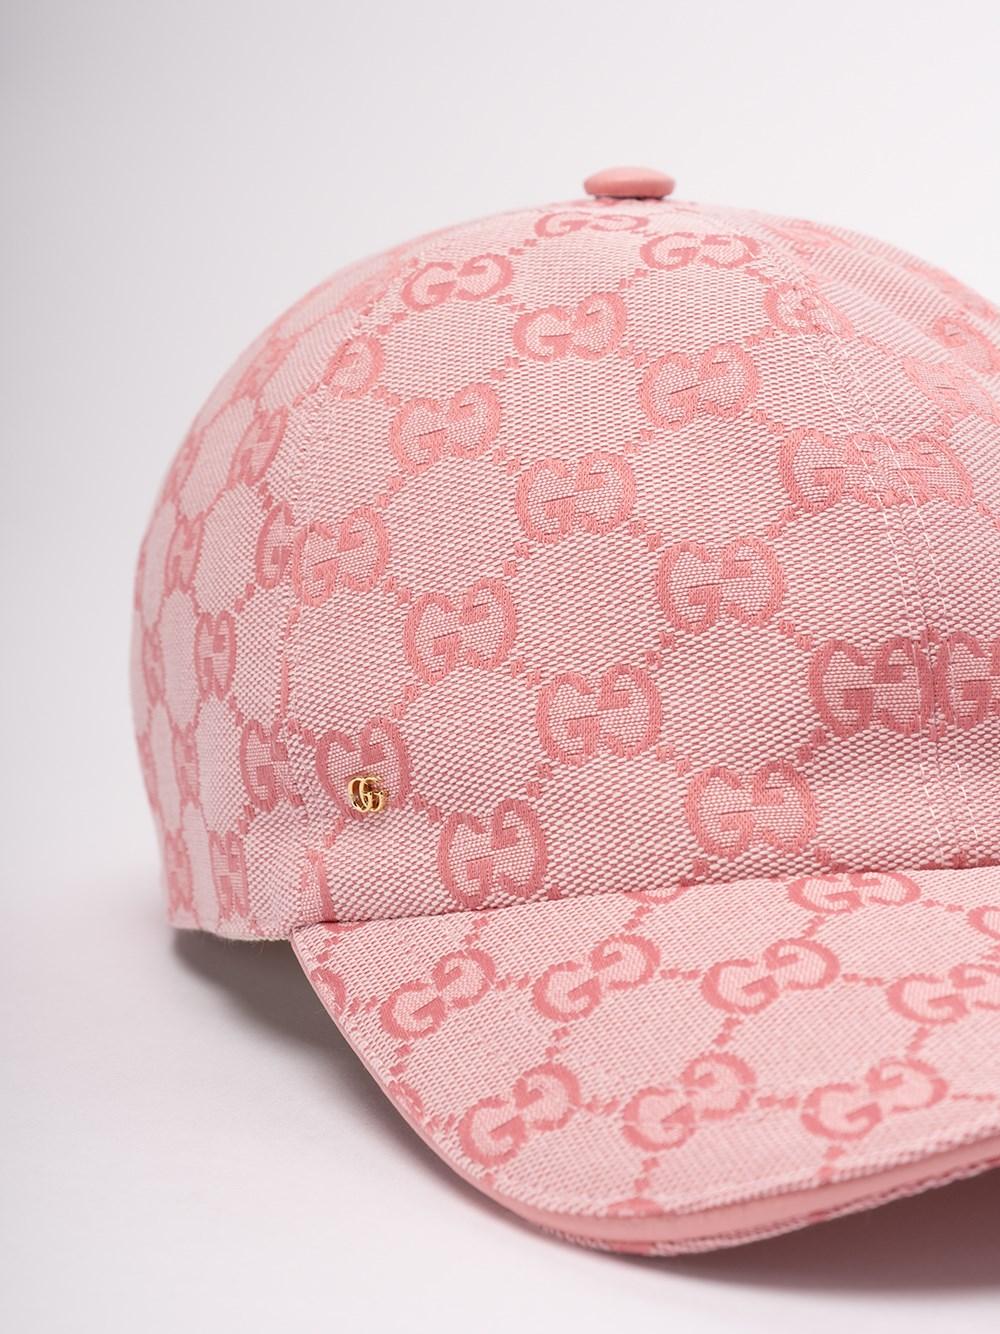 Gucci GG Canvas Baseball Hat, Size L, Pink